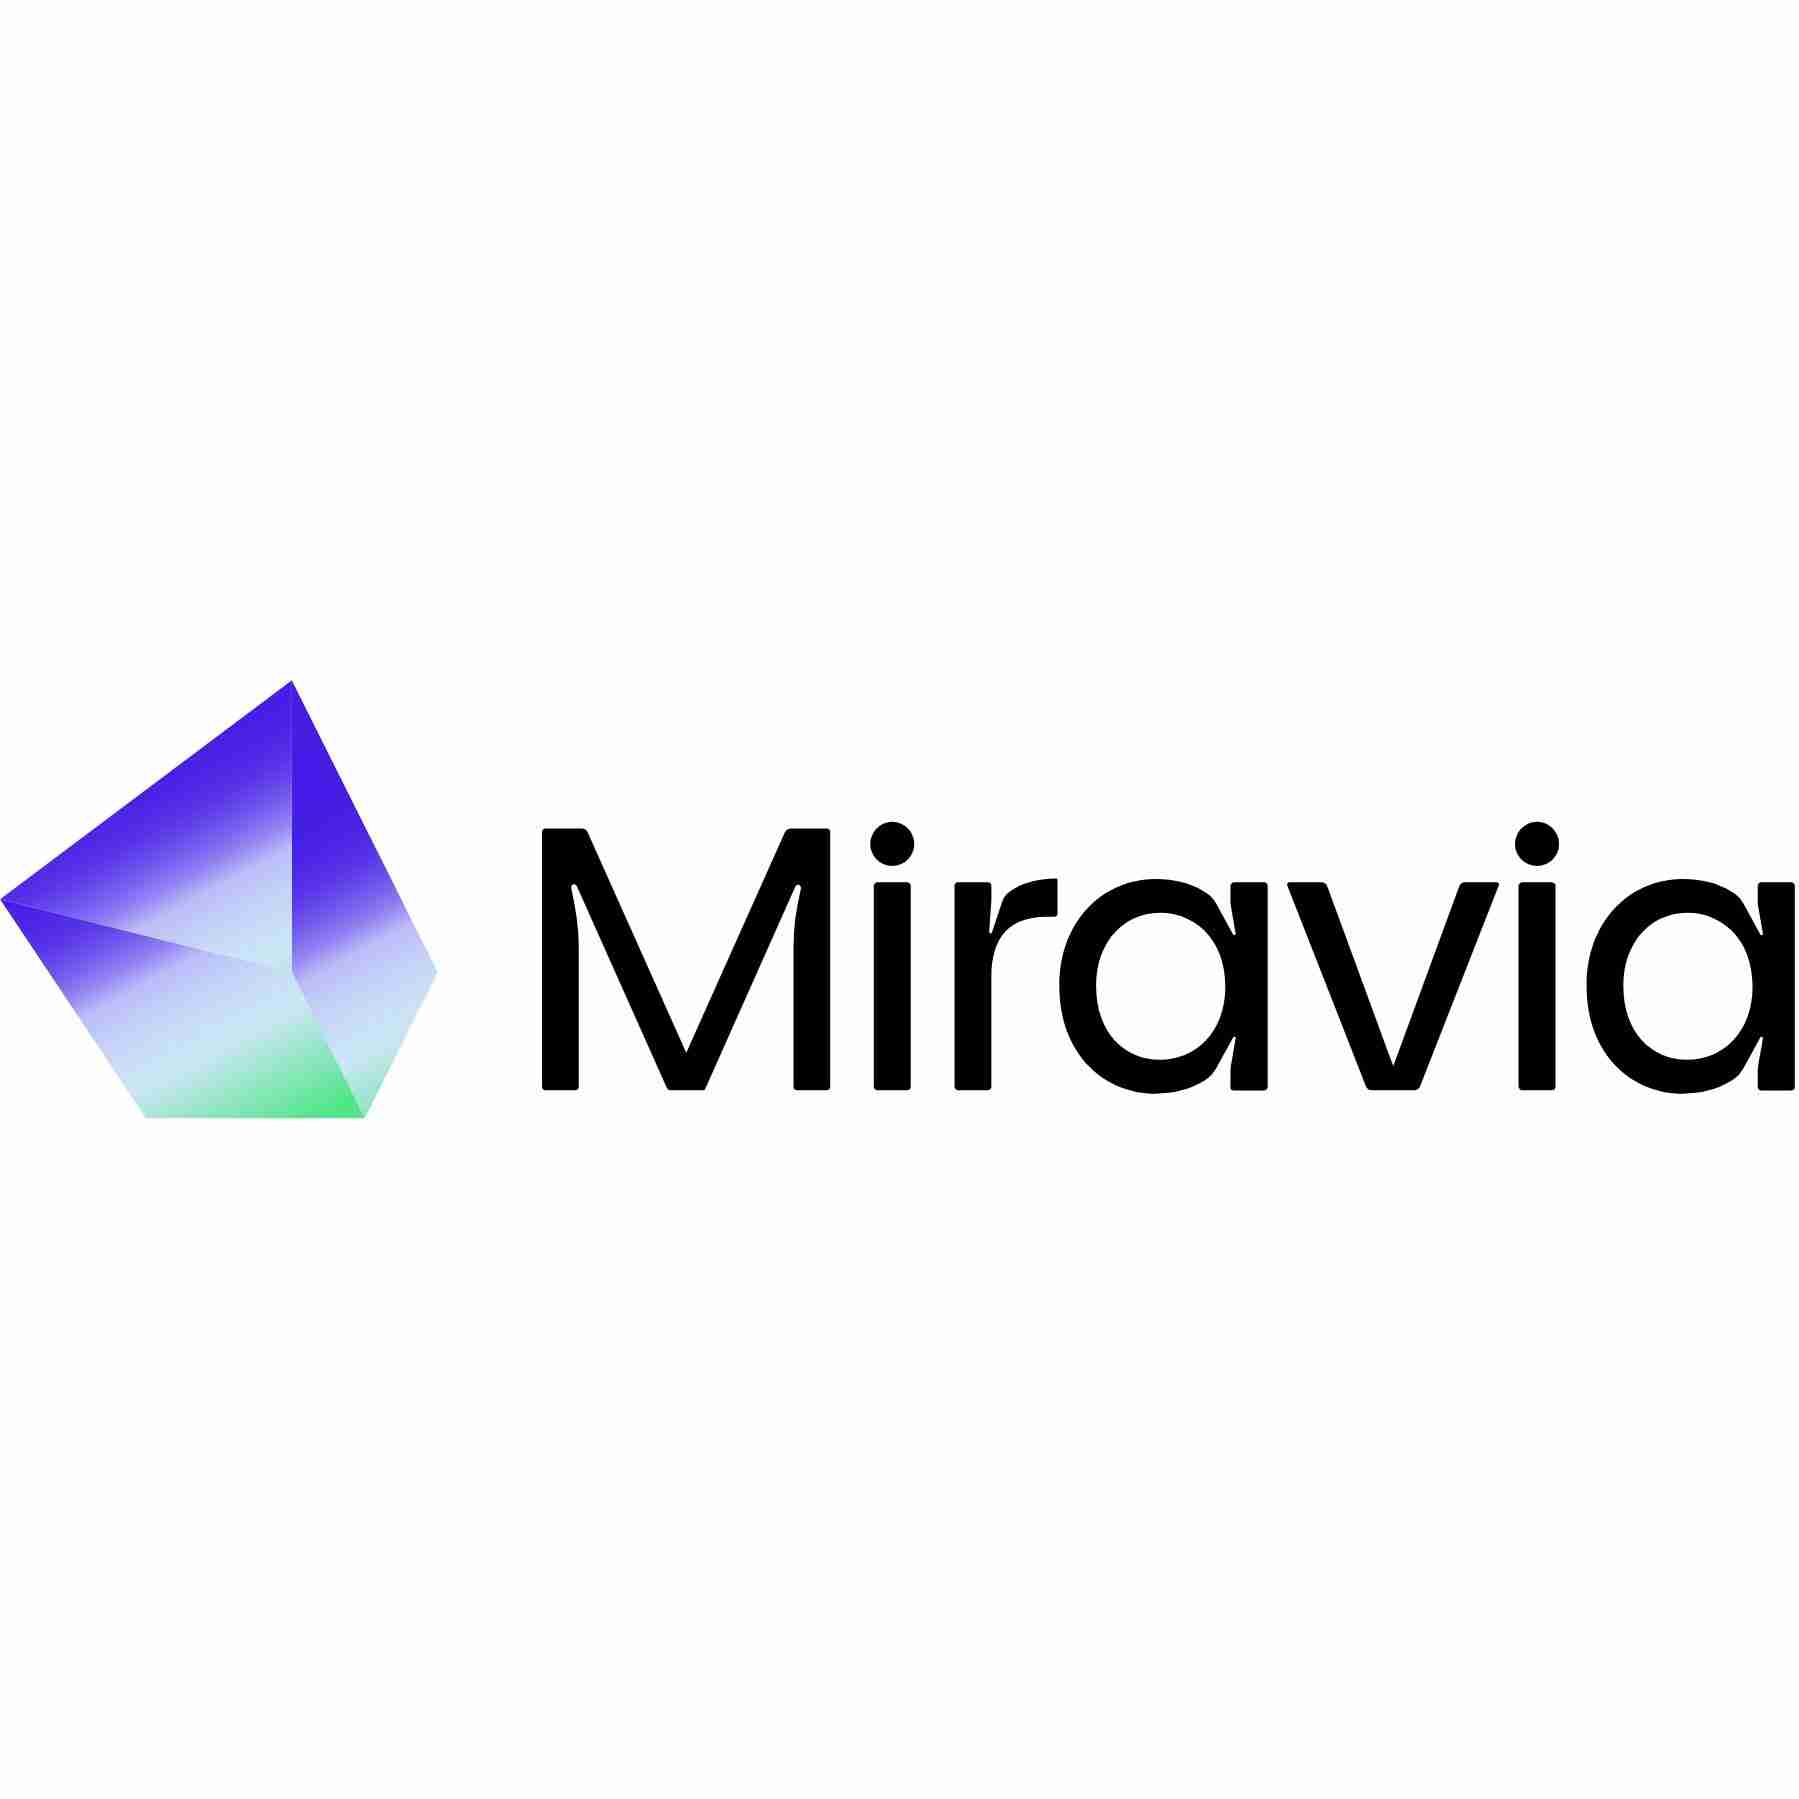 Miravia Reviews